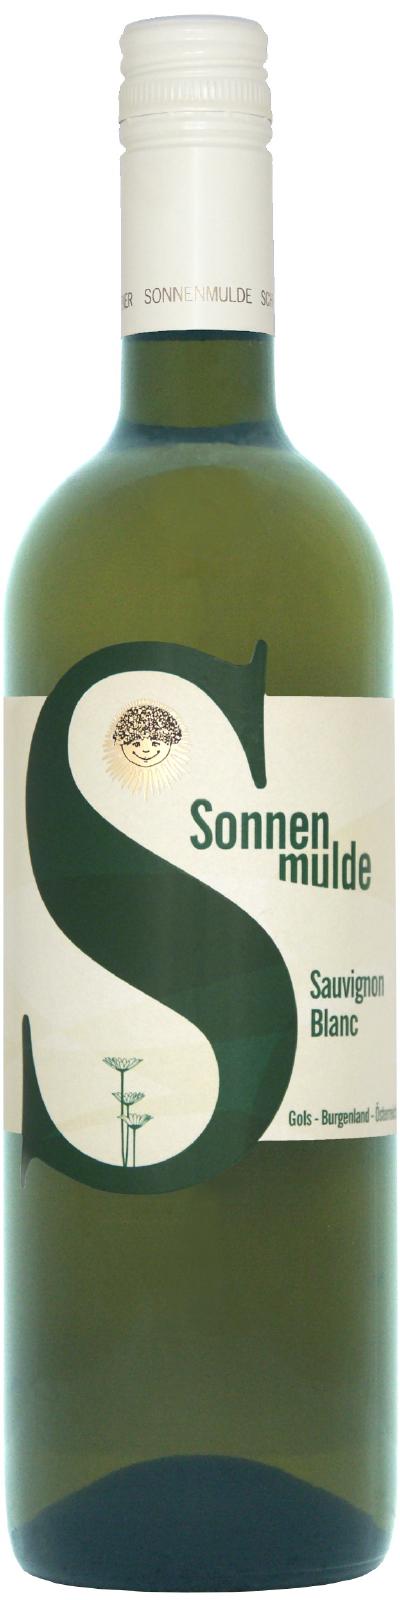 A bottle of Sauvignon Blanc